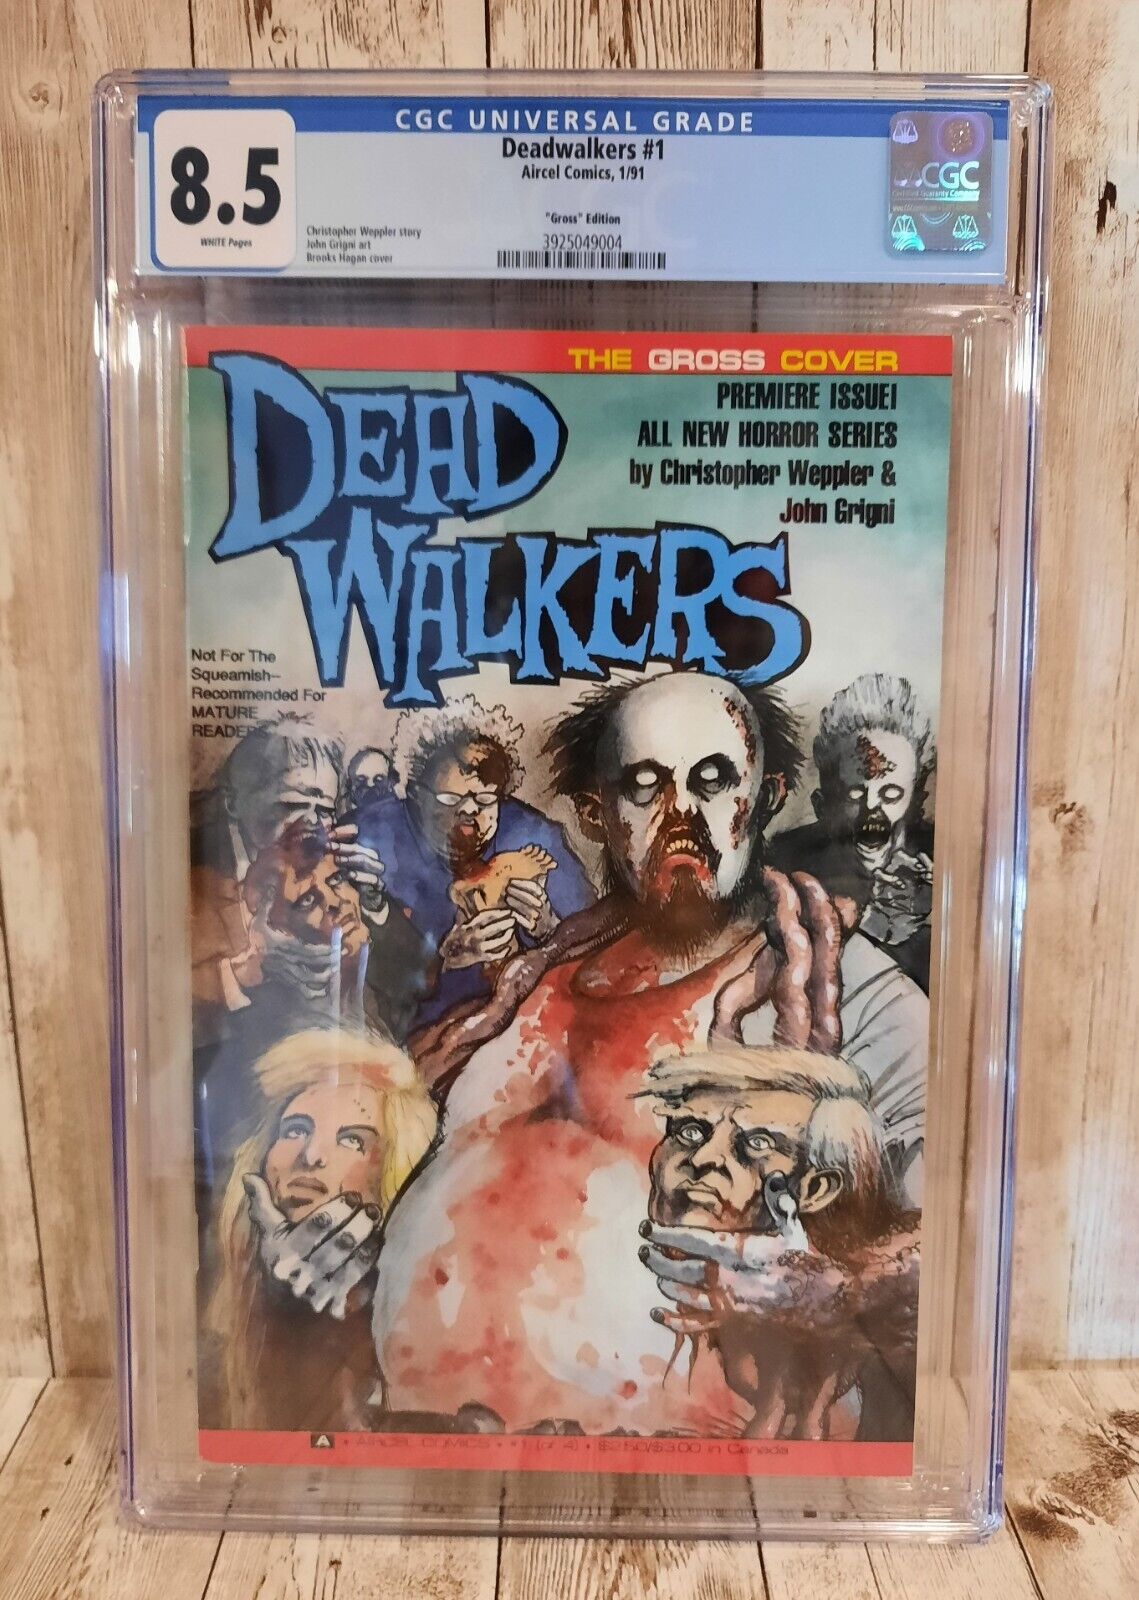 Deadwalkers #1 January 1991 CGC 8.5 VF+ (Gross Edition)